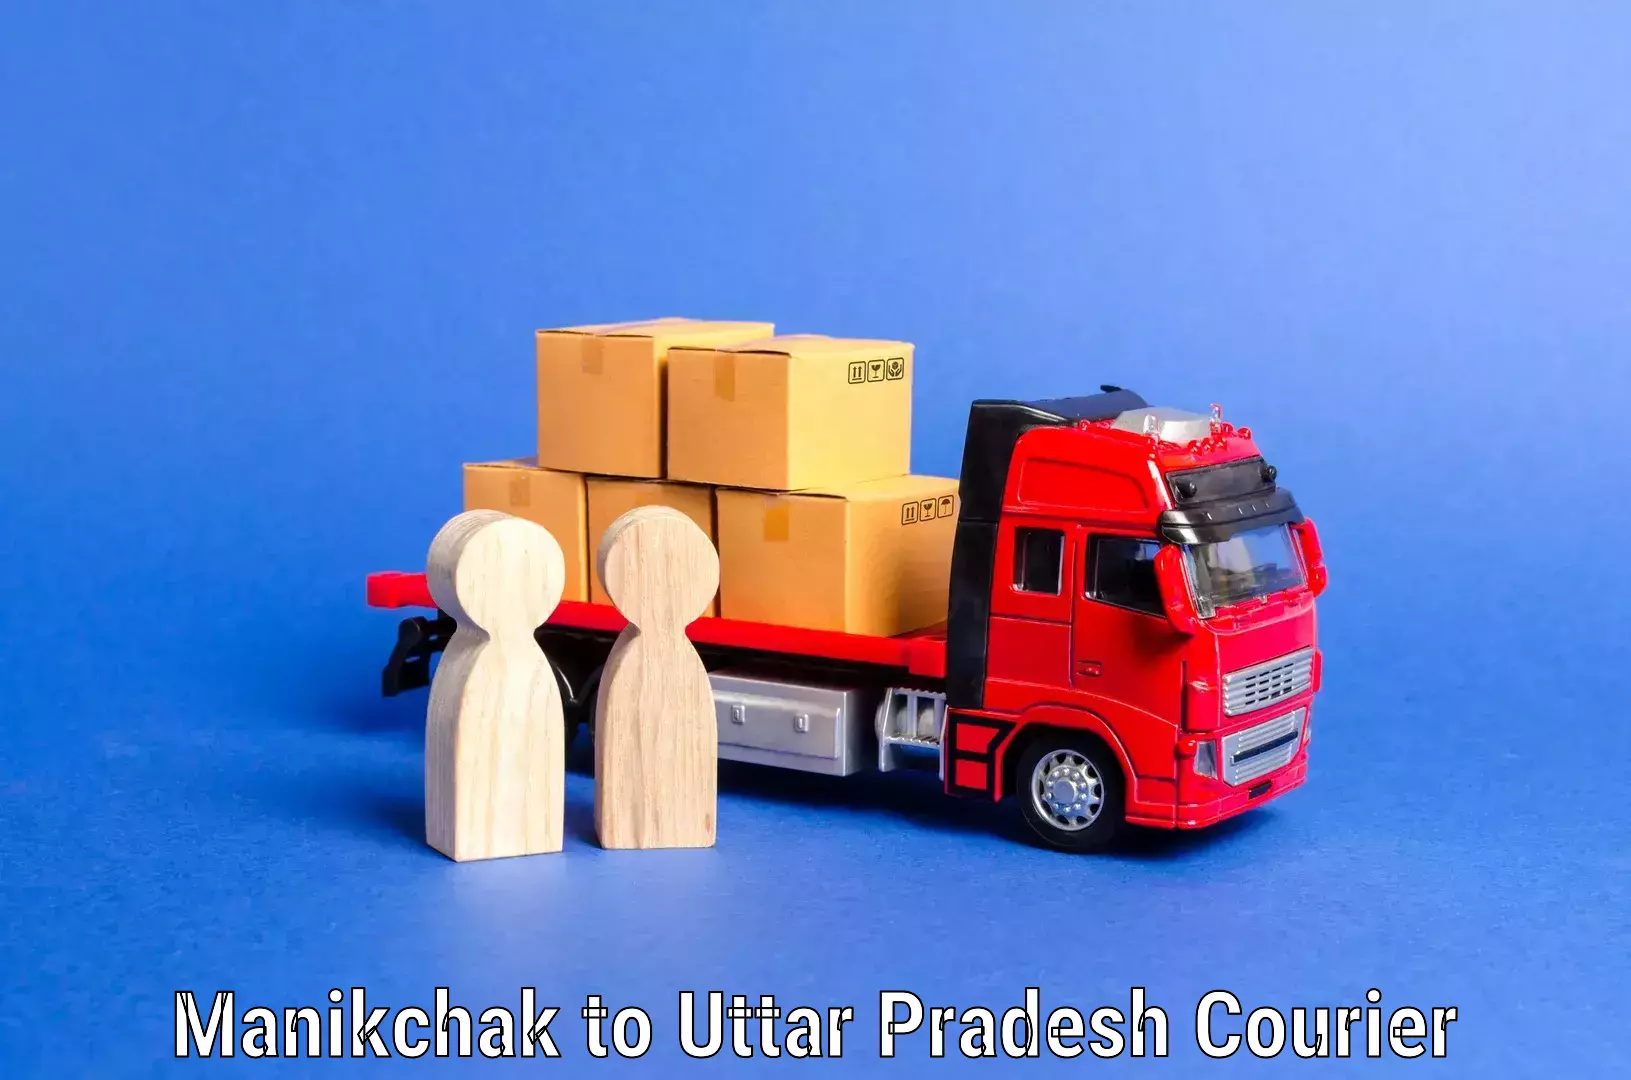 Moving and packing experts Manikchak to Uttar Pradesh